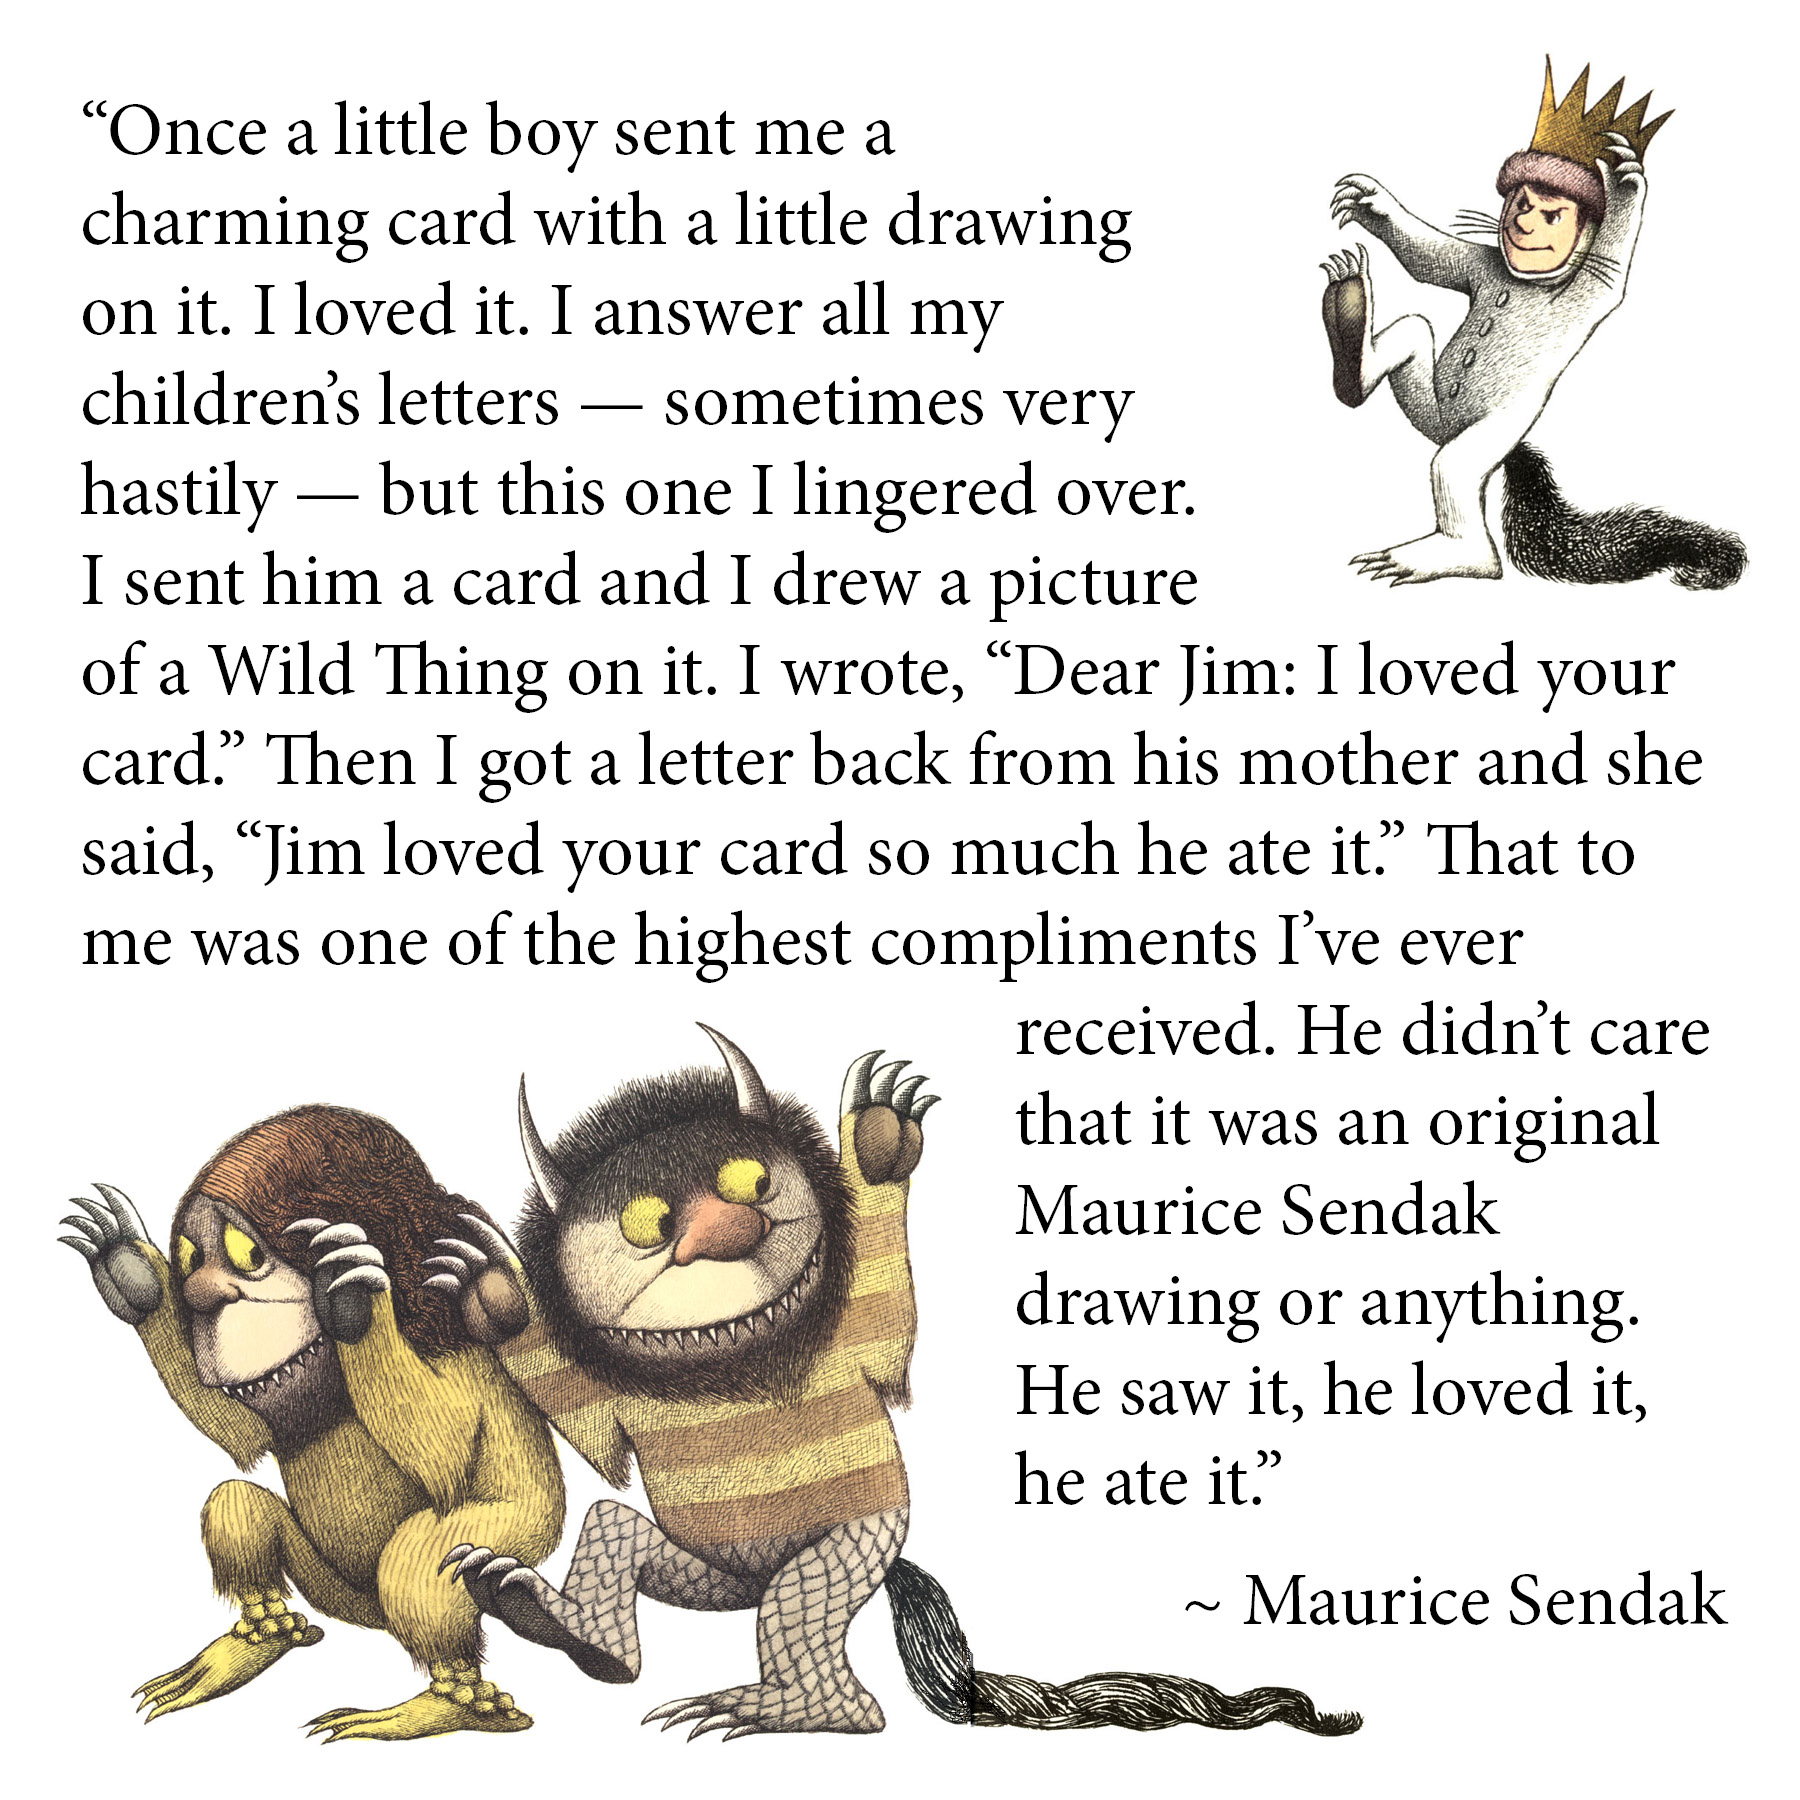 Maurice Sendak's quote #1